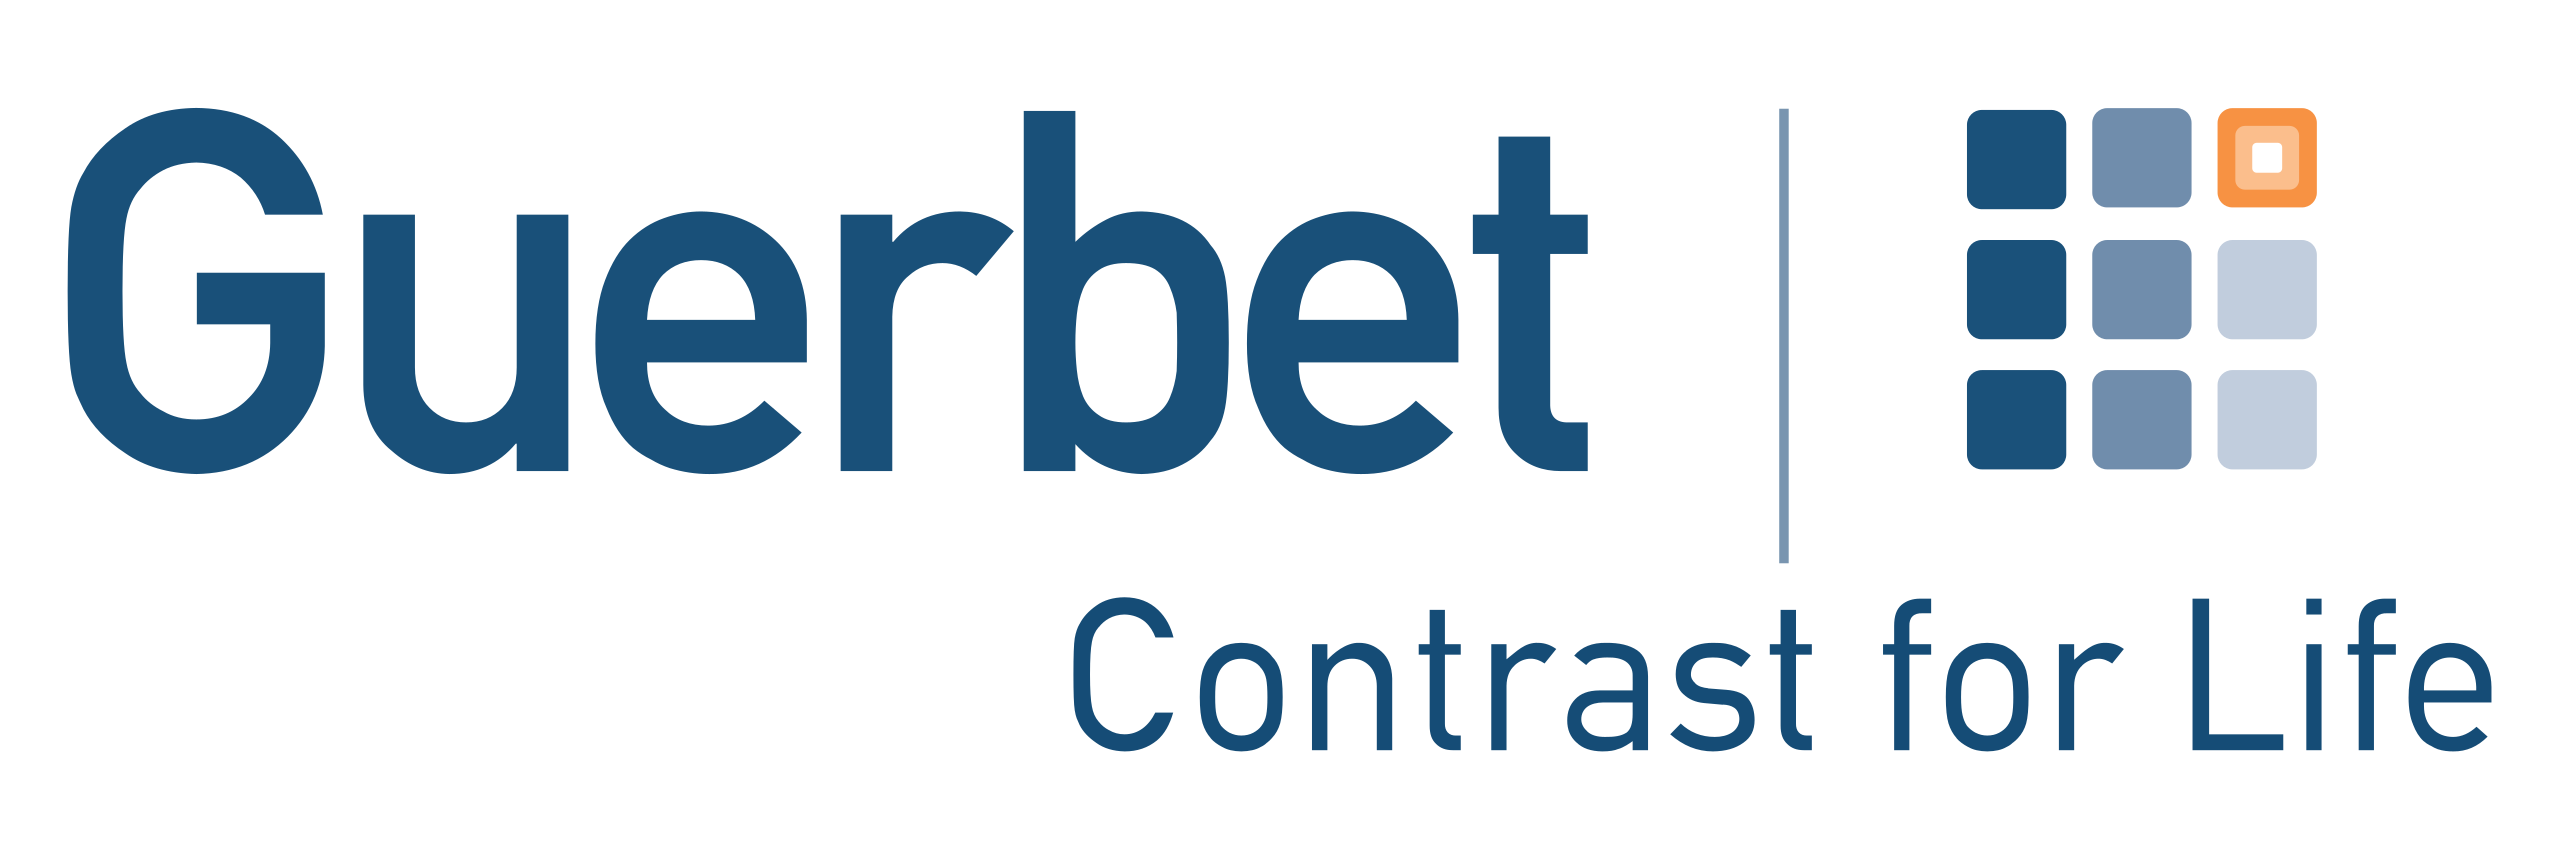 Guerbet-logo.svg